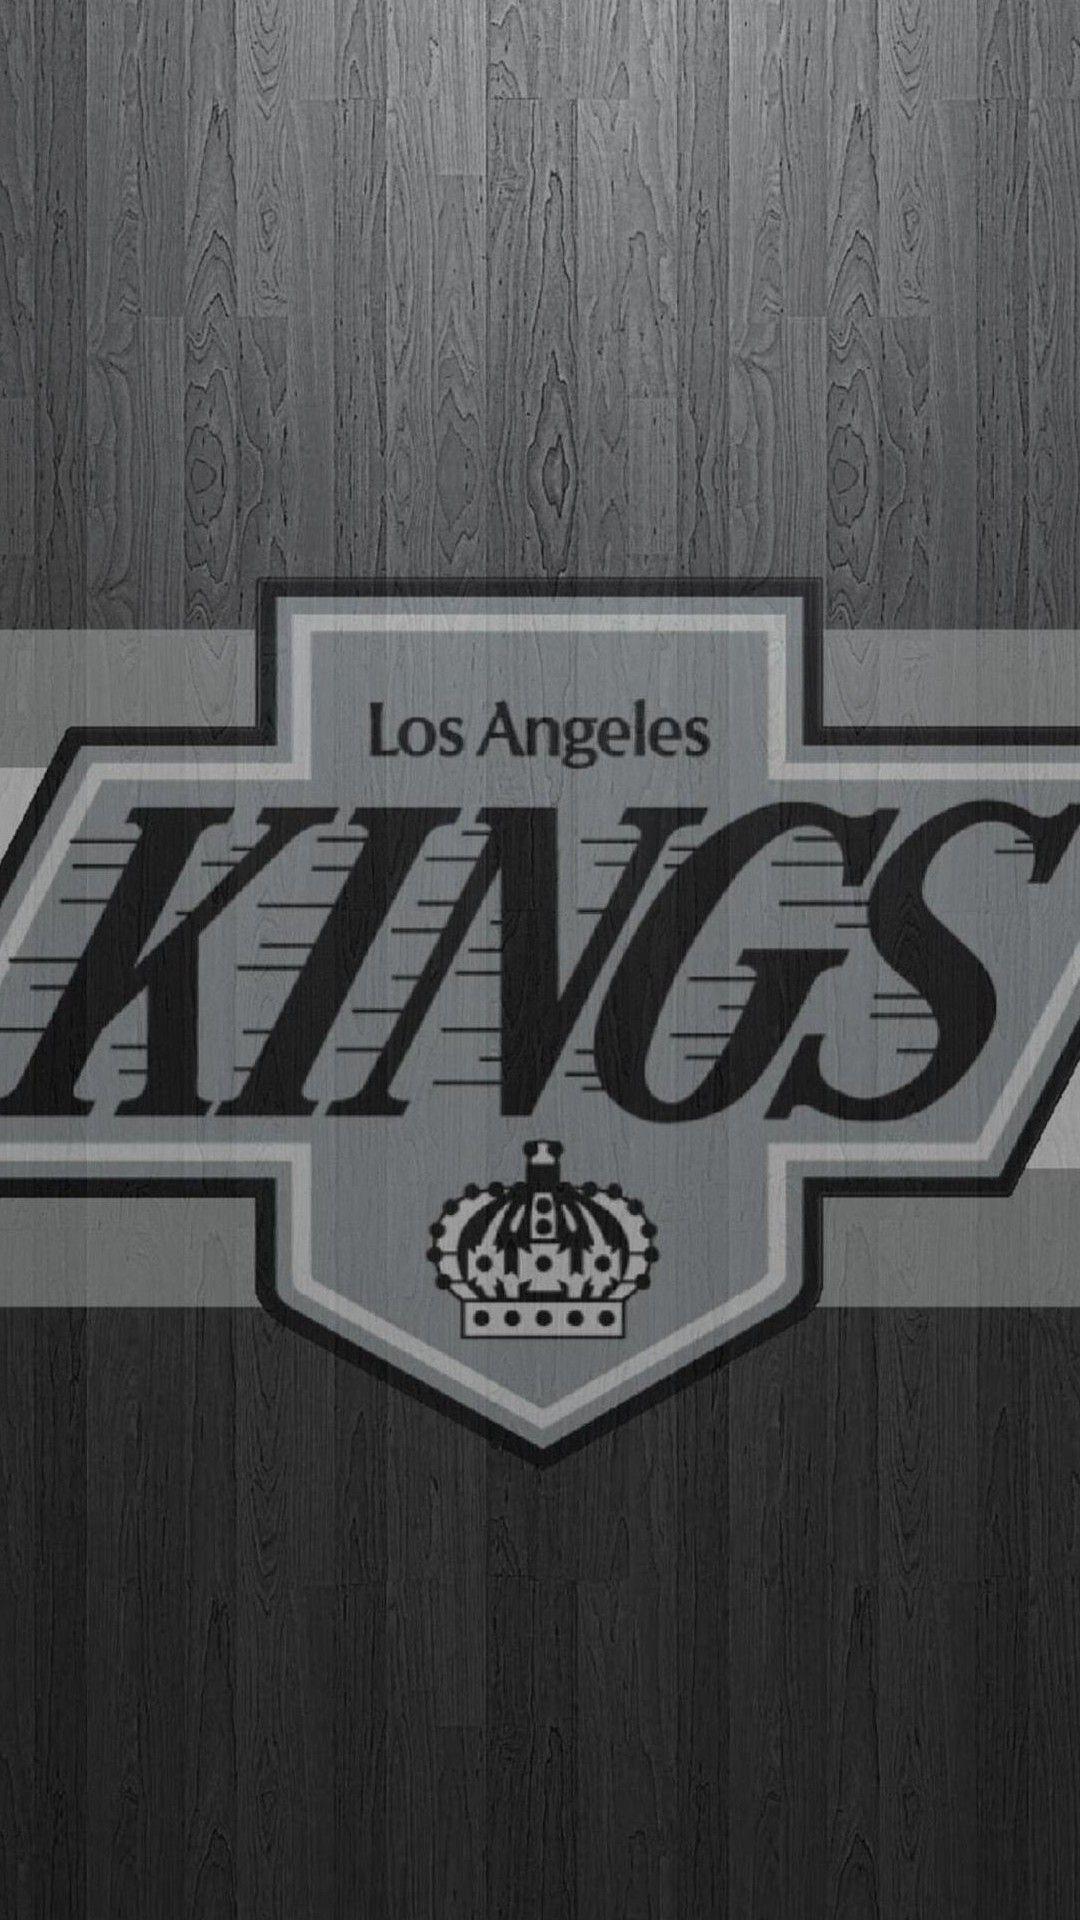 2023 Los Angeles Kings wallpaper – Pro Sports Backgrounds